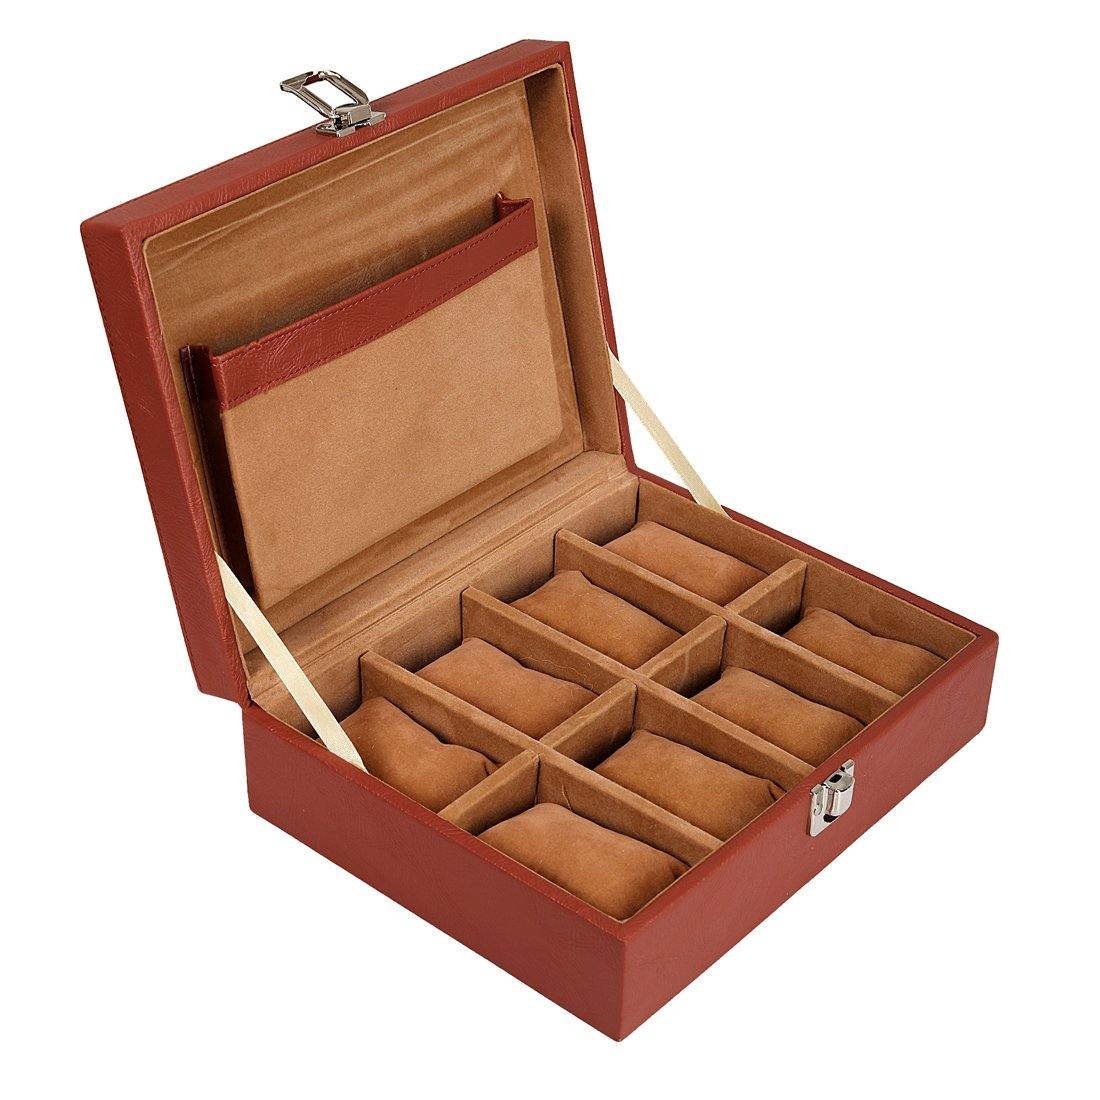 8 Slots Elegant Watch Organizer Box With Plain PU Leather Finish